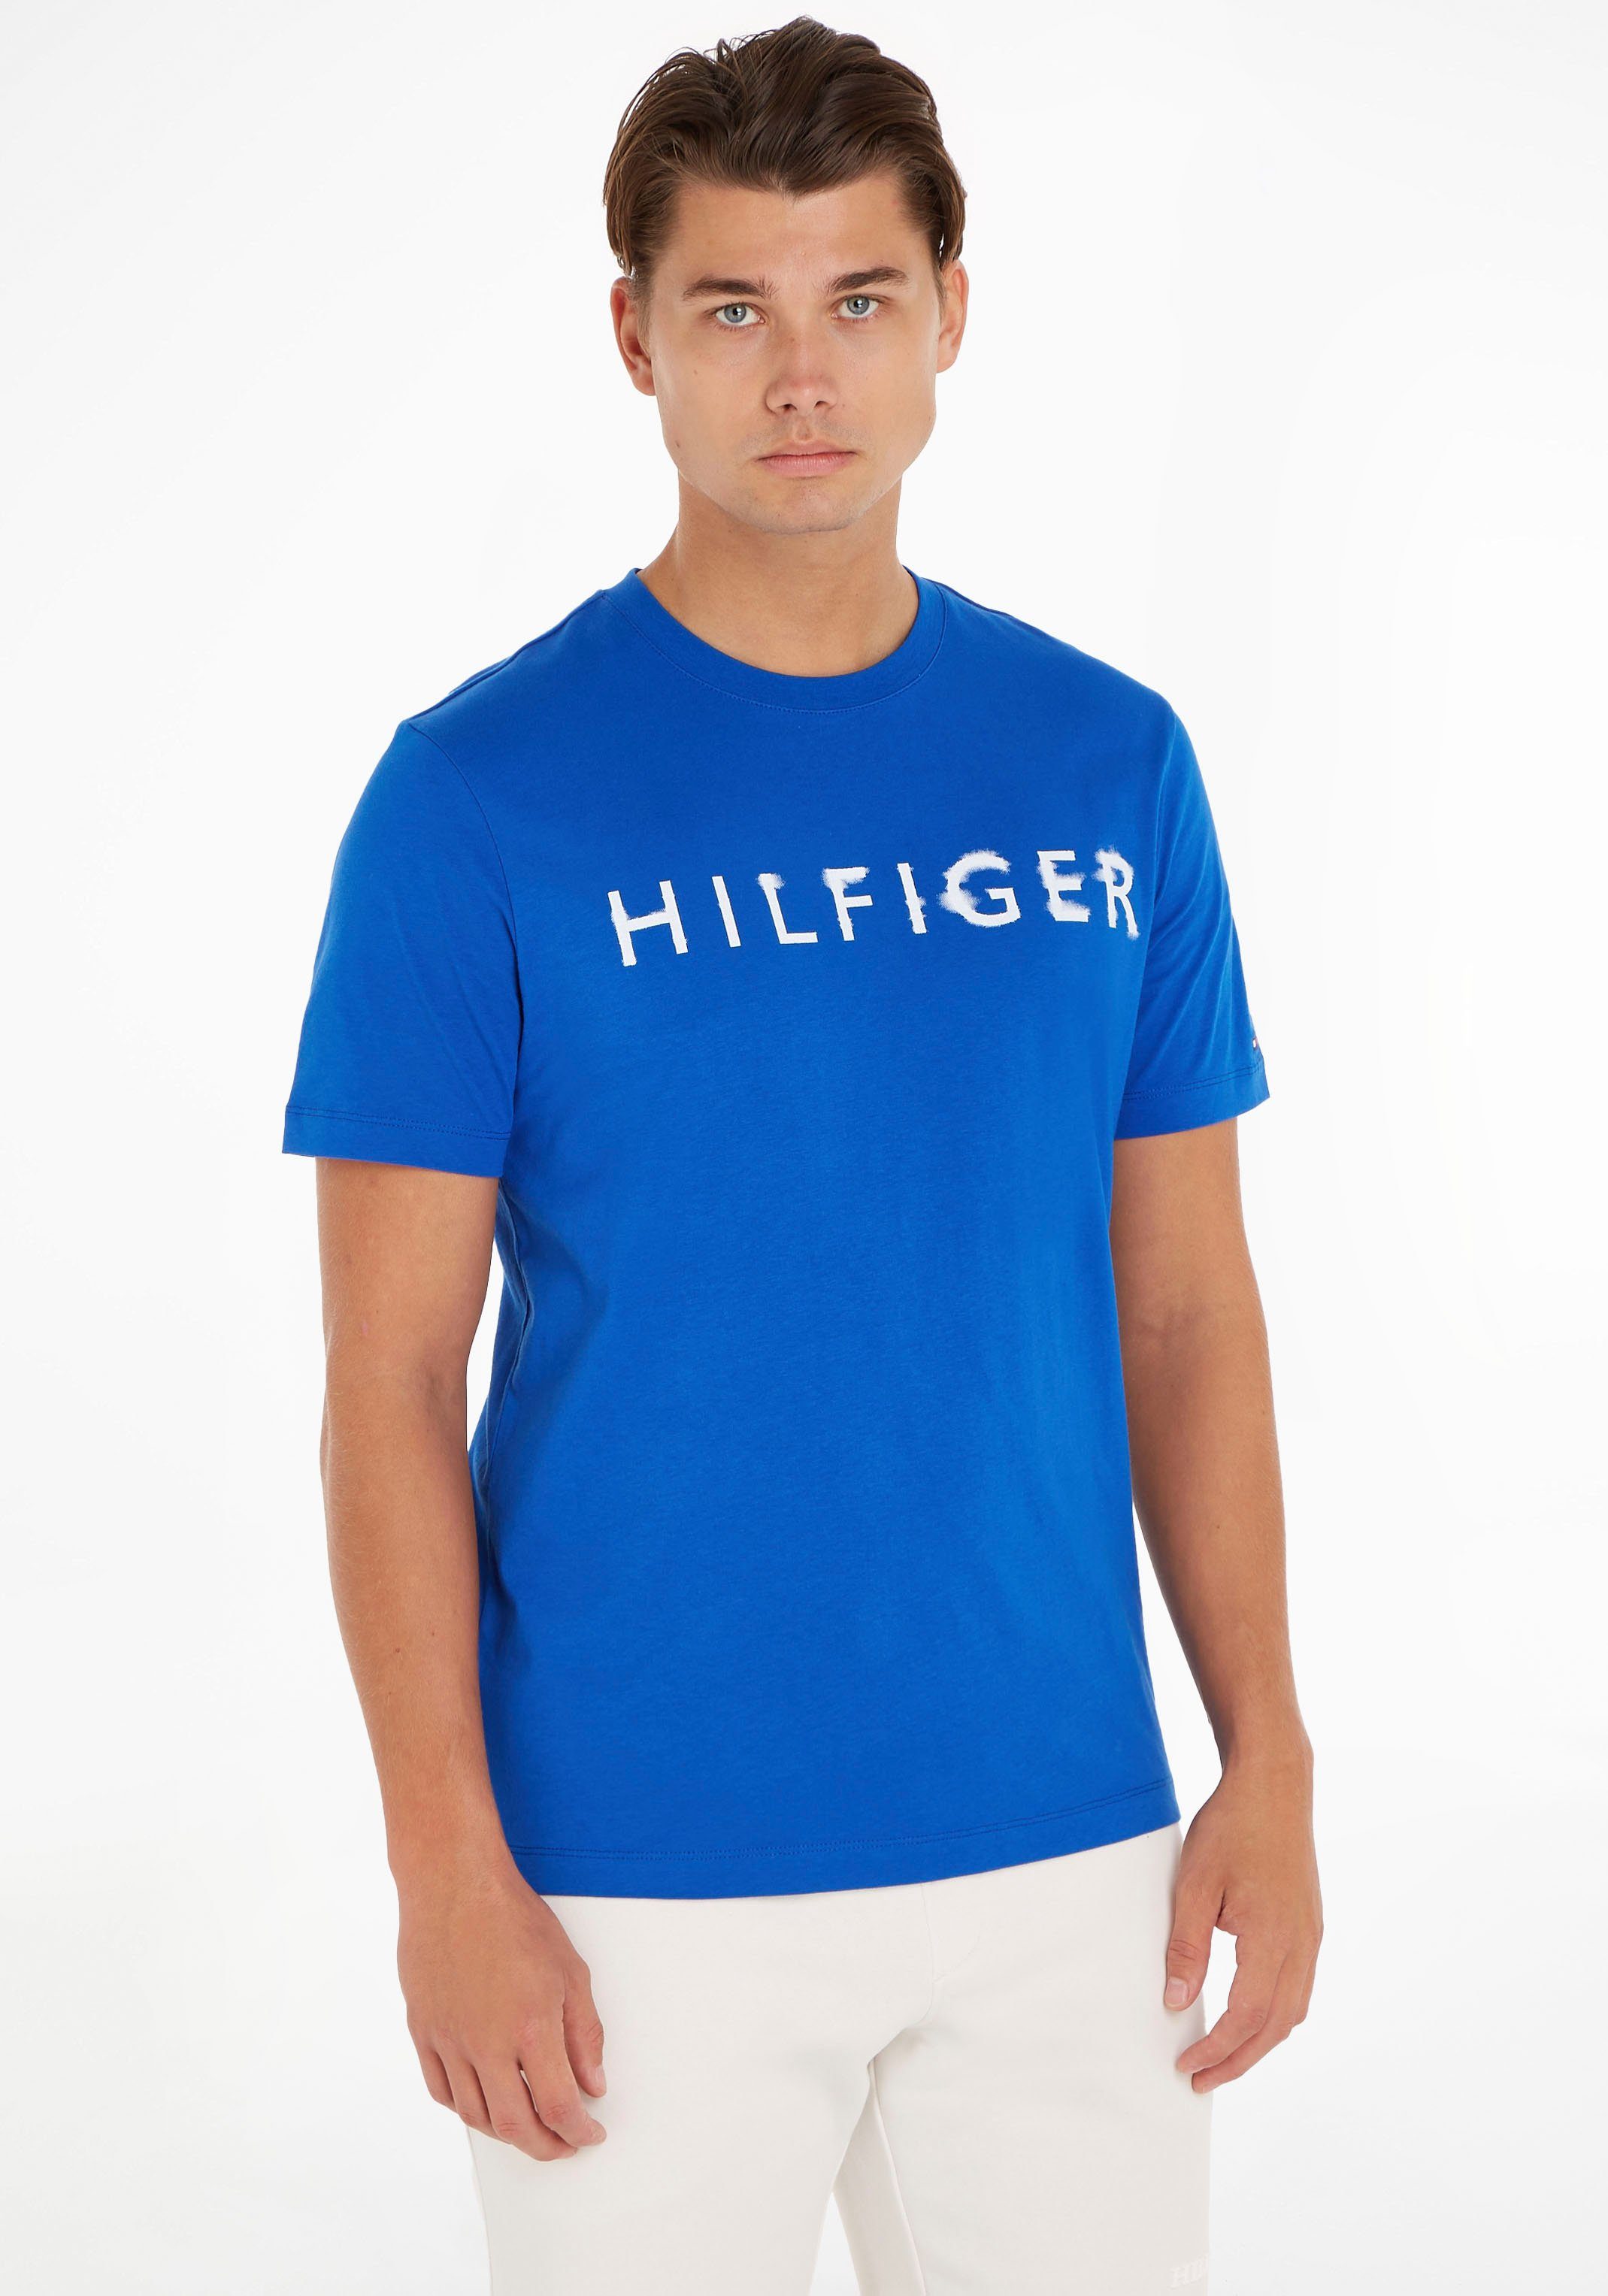 INK HILFIGER Tommy Hilfiger T-Shirt TEE